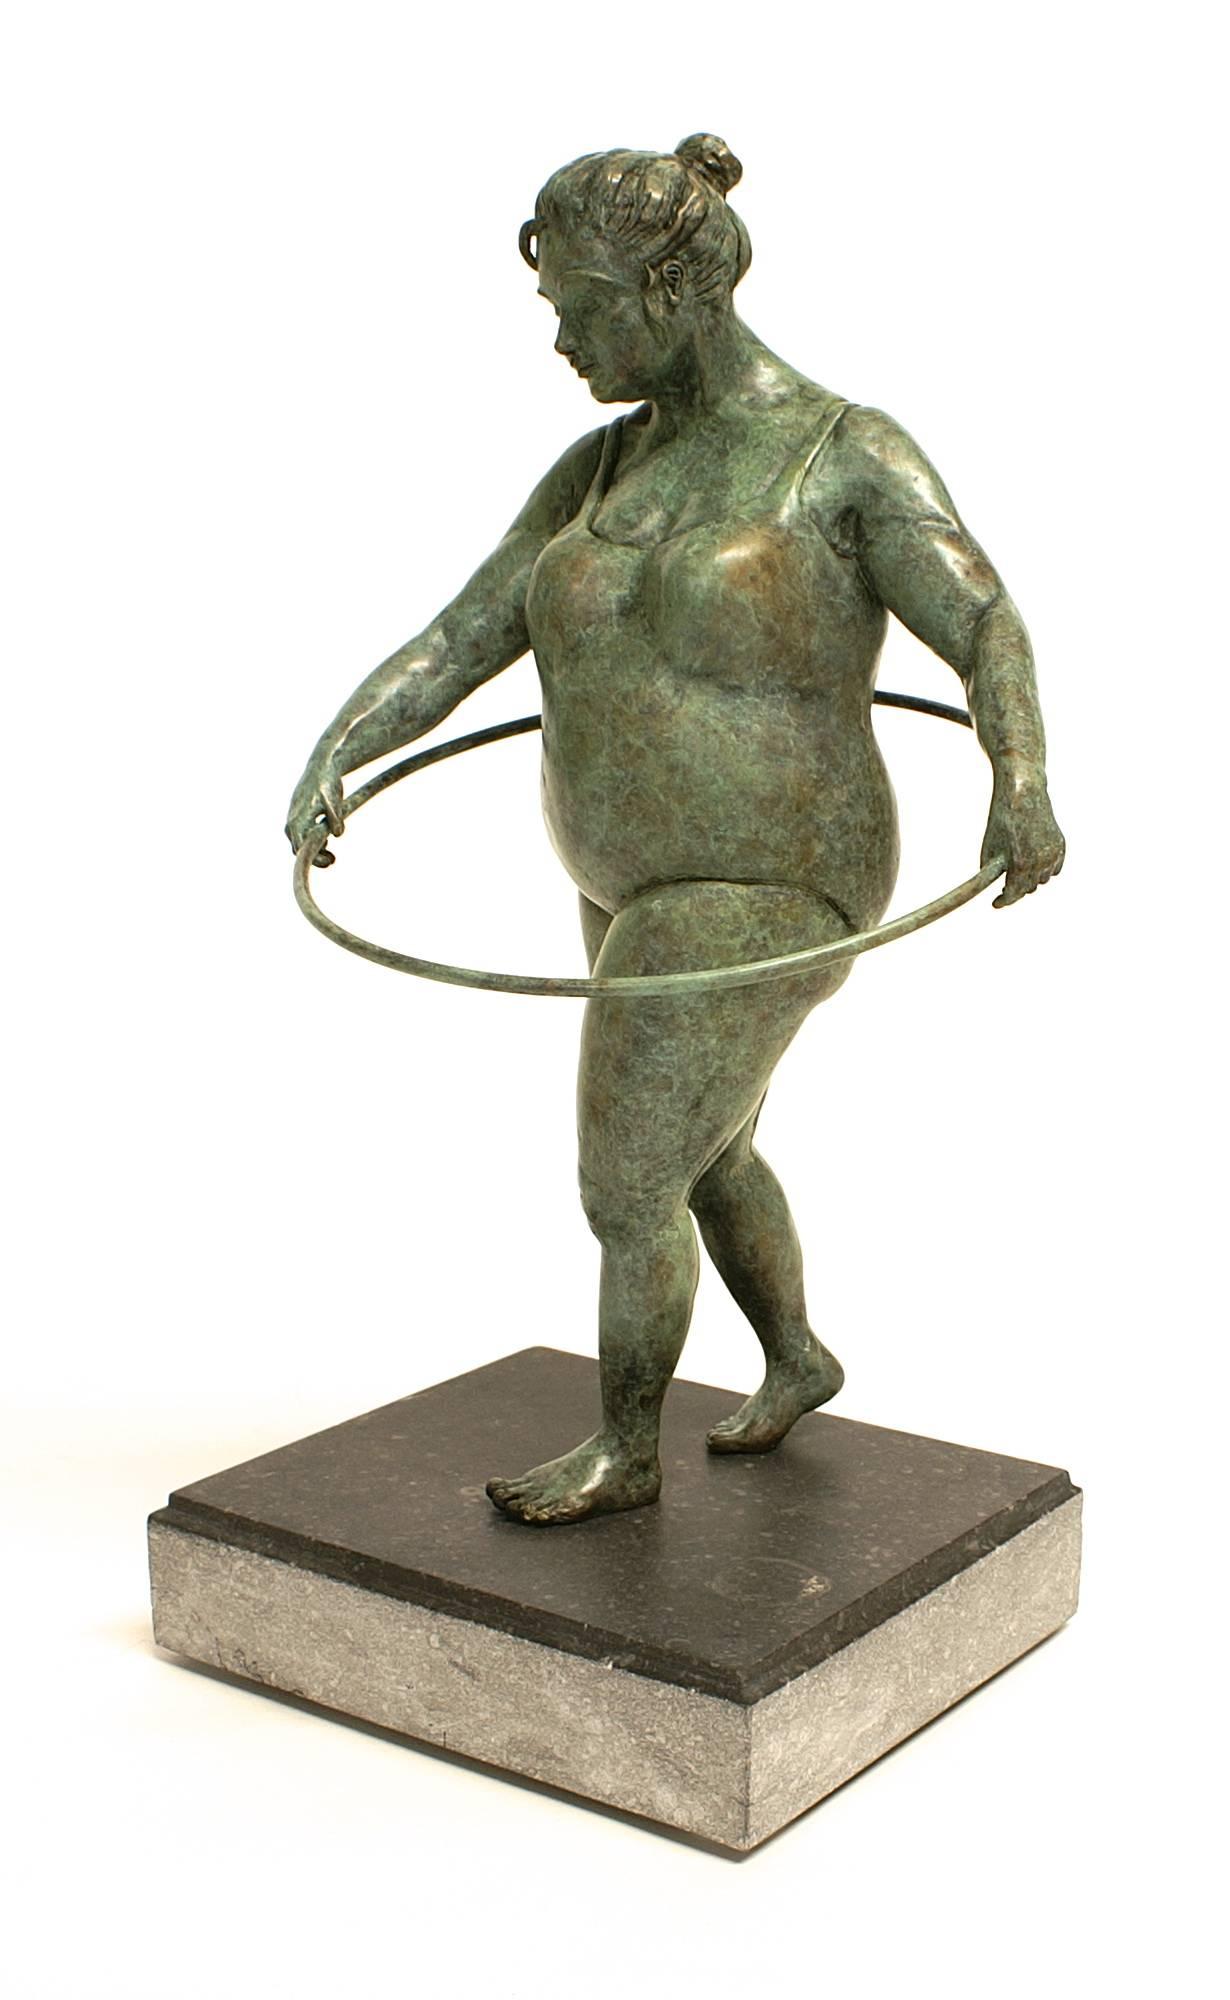 Veronique Clamot Figurative Sculpture - "Cinquieme Essai" Bronze rounded figure with a hula hoop in green patina